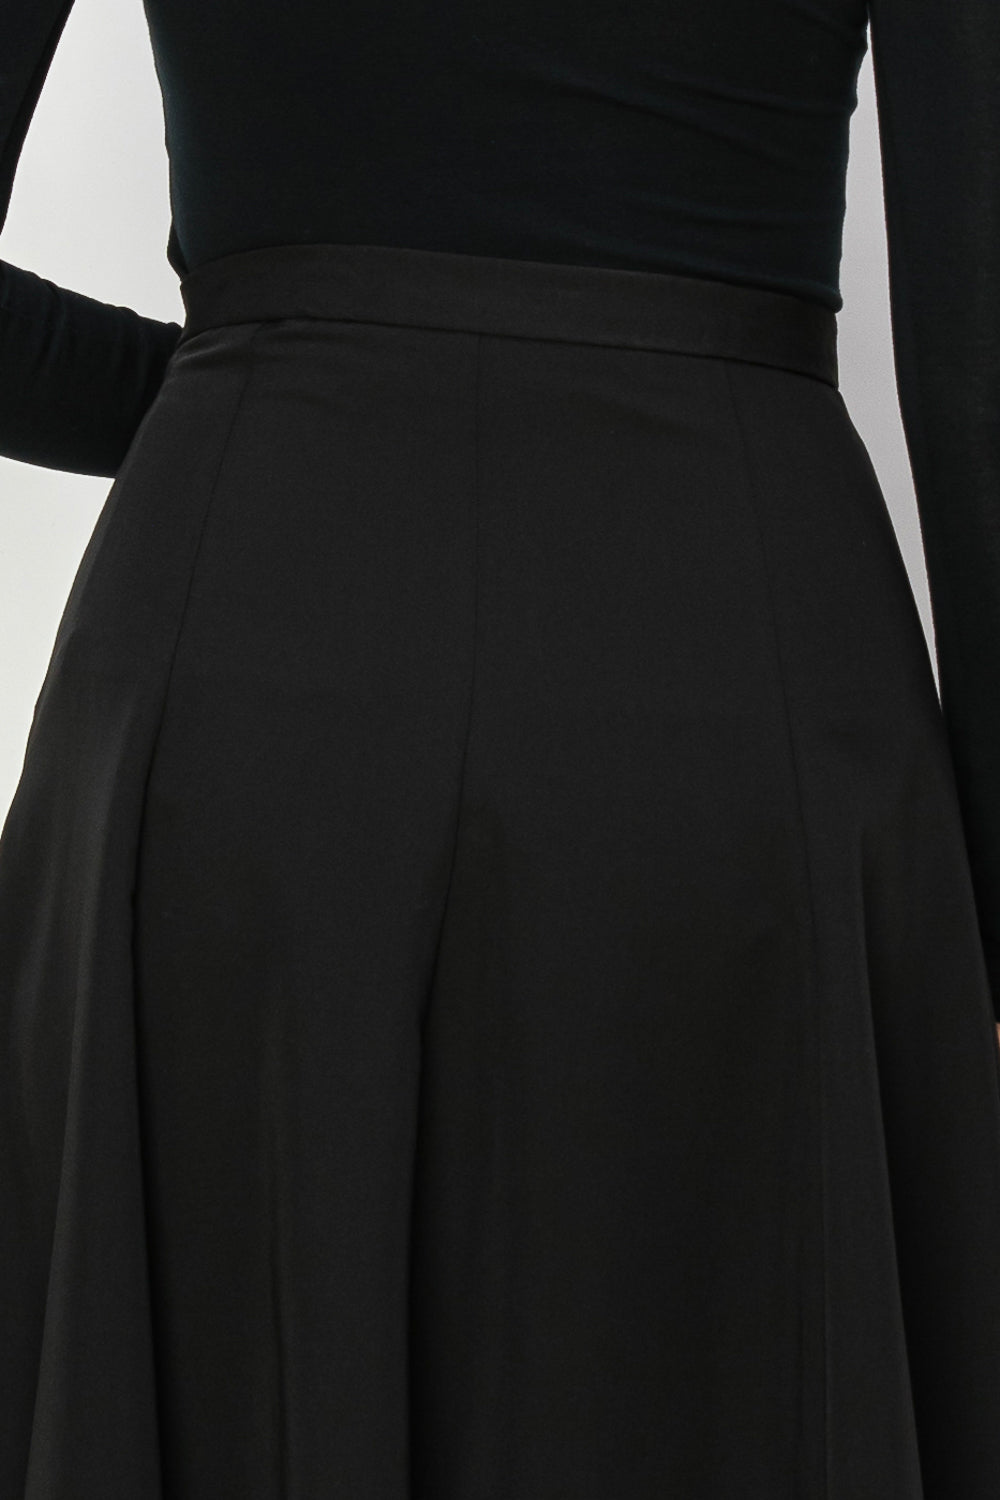  Dress Fabric Knee Length Paneled Skirt With Side Zip Closure